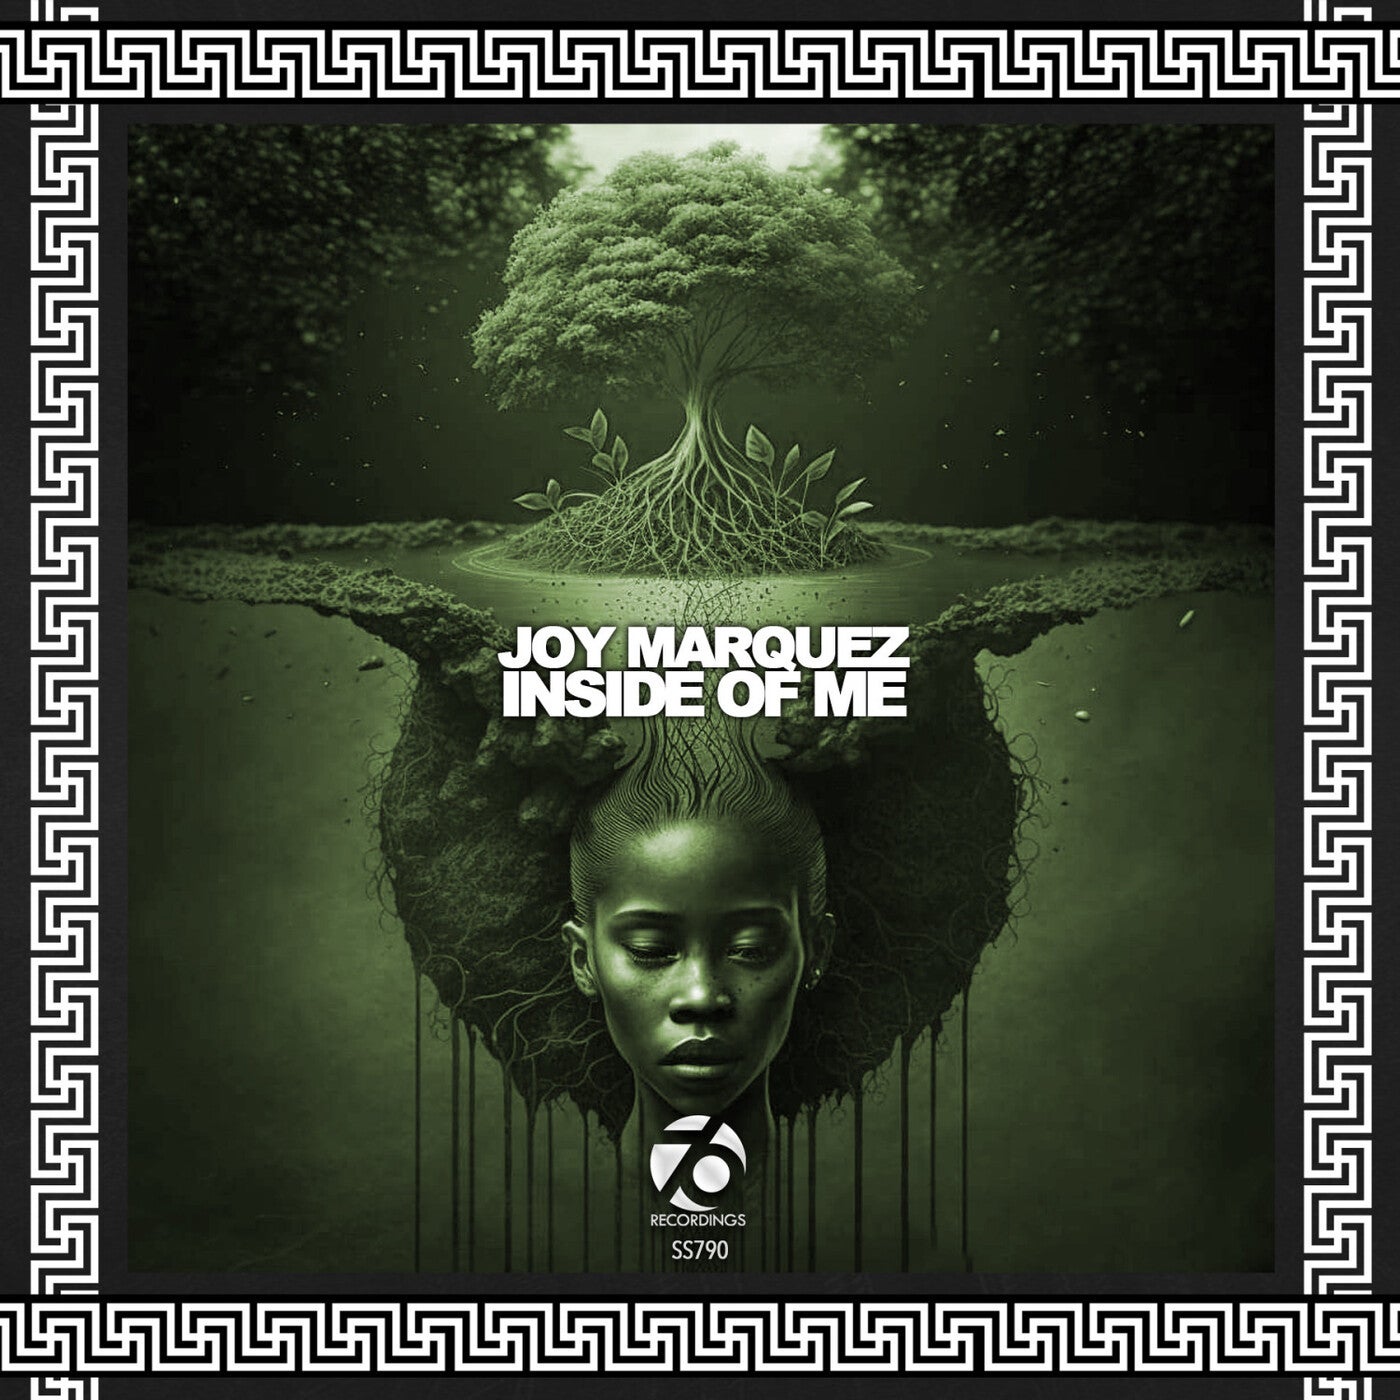 Joy Marquez - Inside Of Me on 76 Recordings